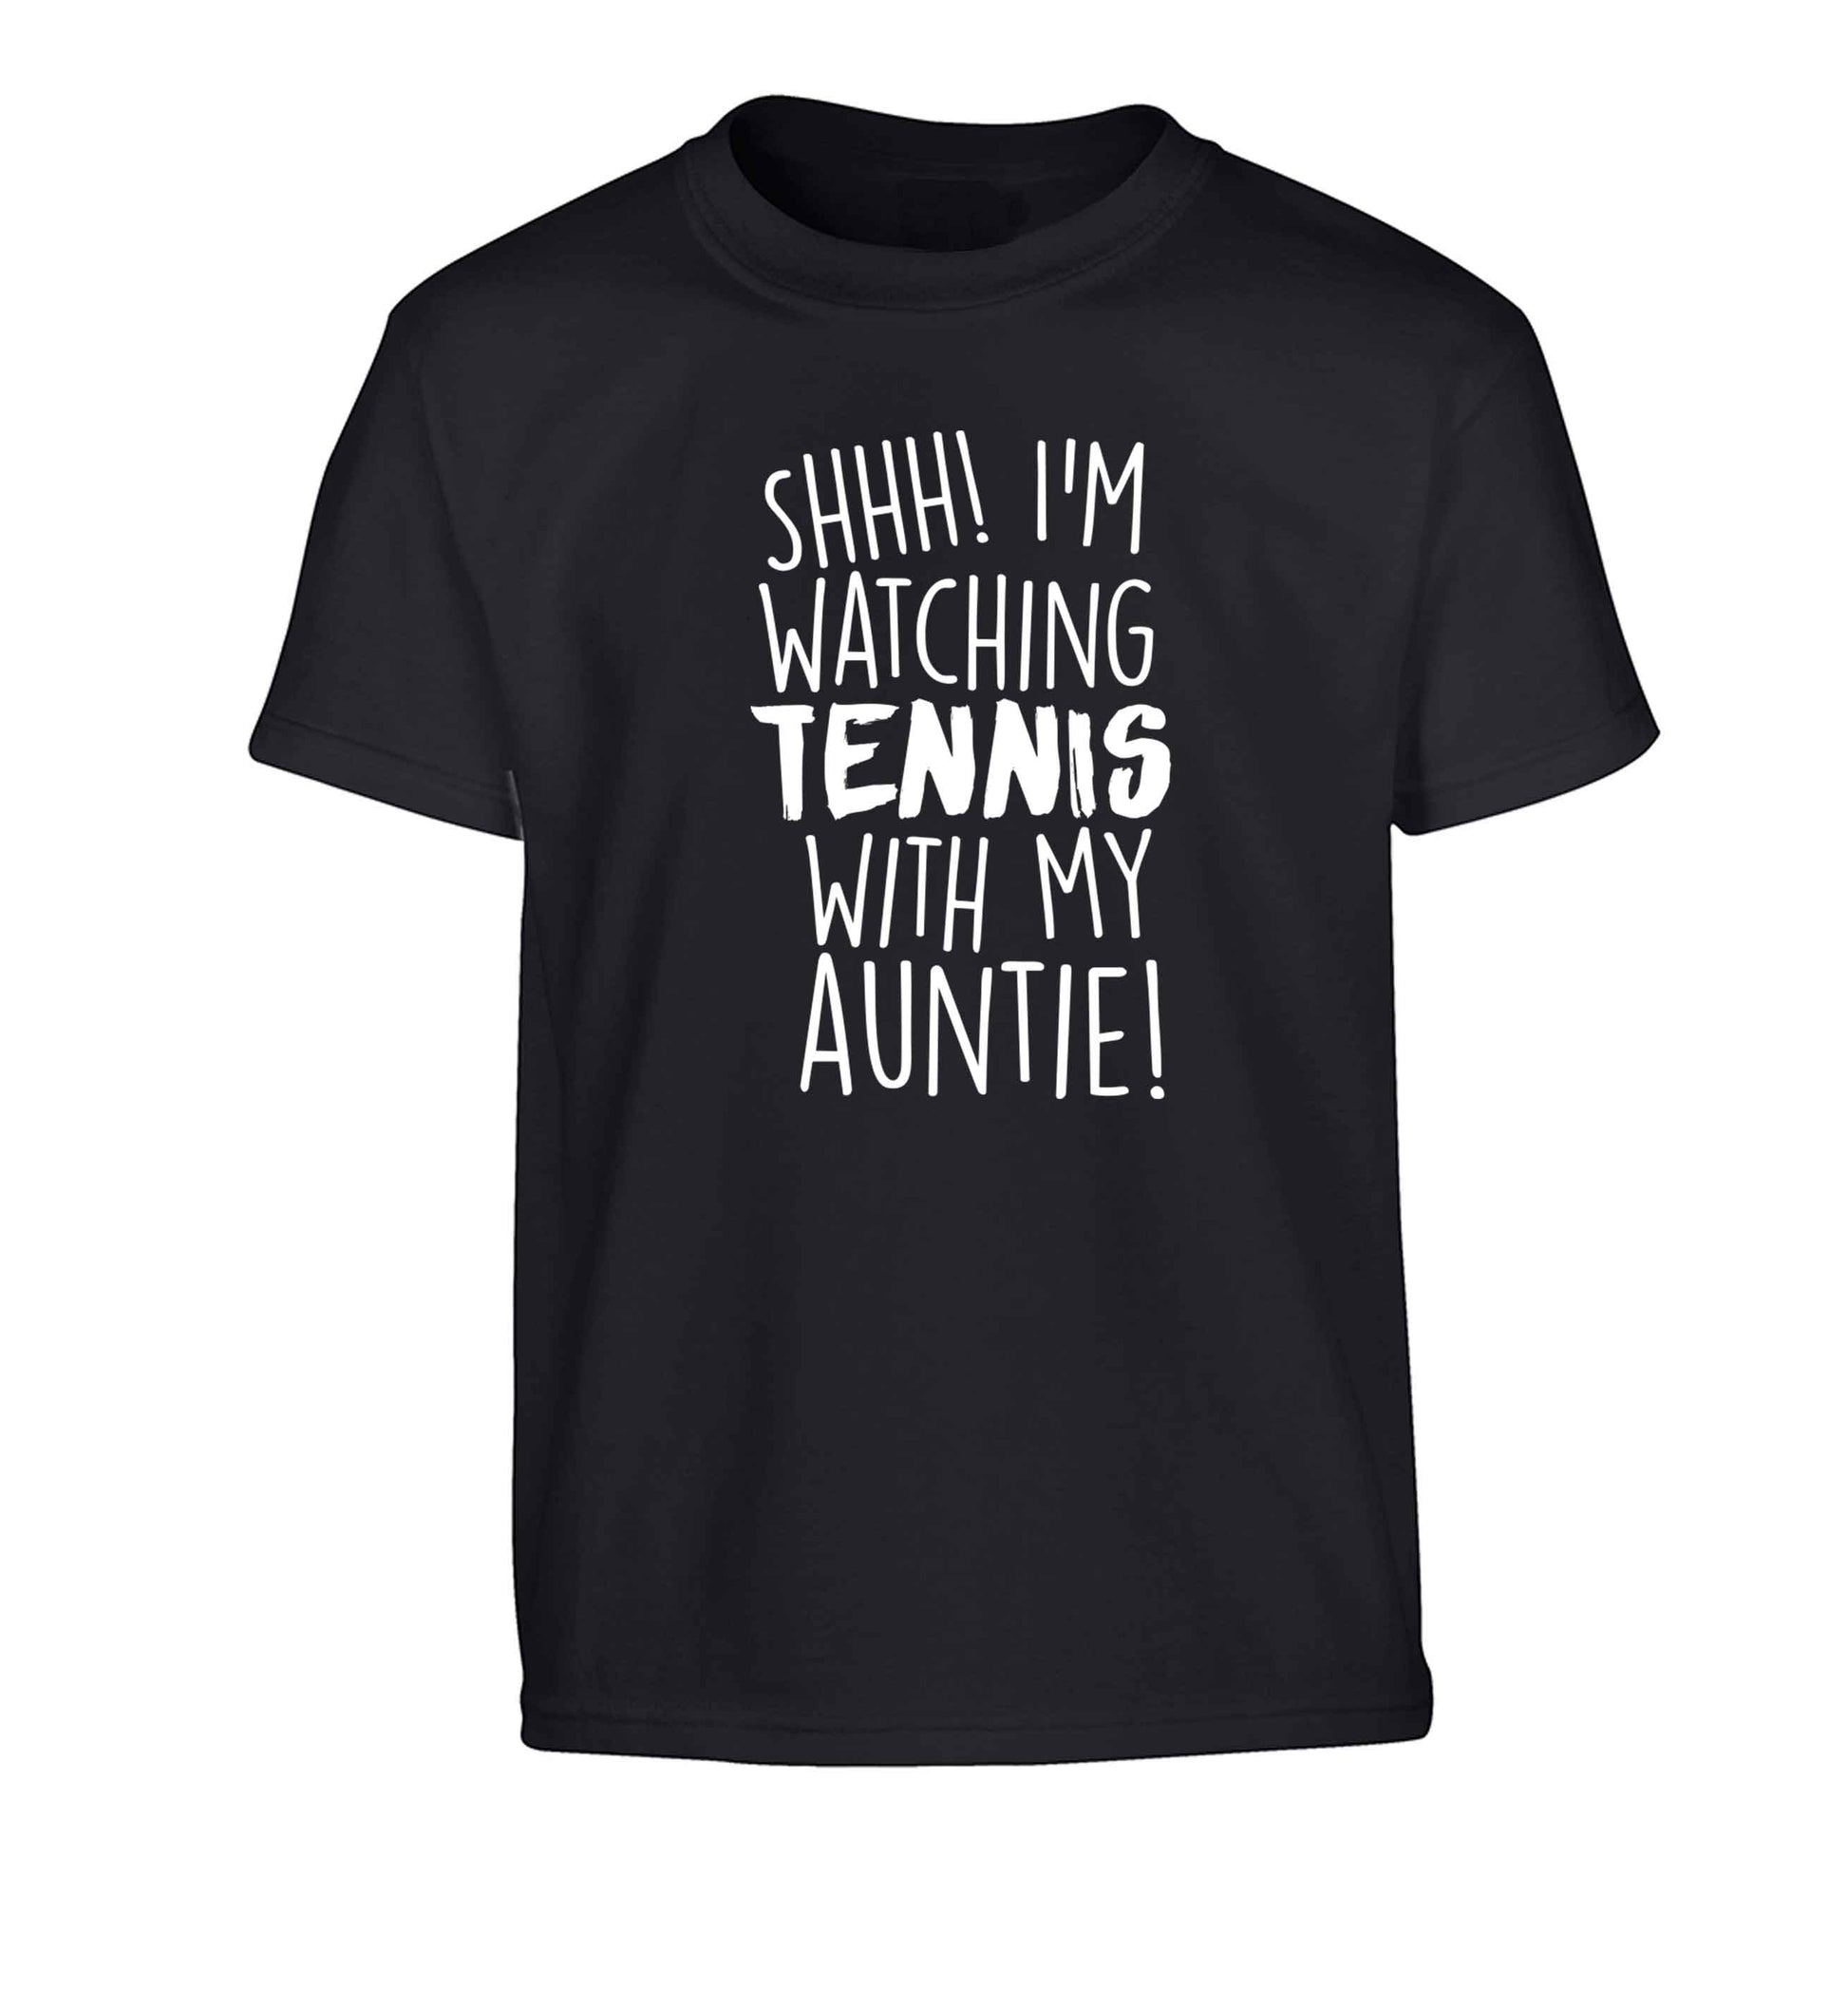 Shh! I'm watching tennis with my auntie! Children's black Tshirt 12-13 Years